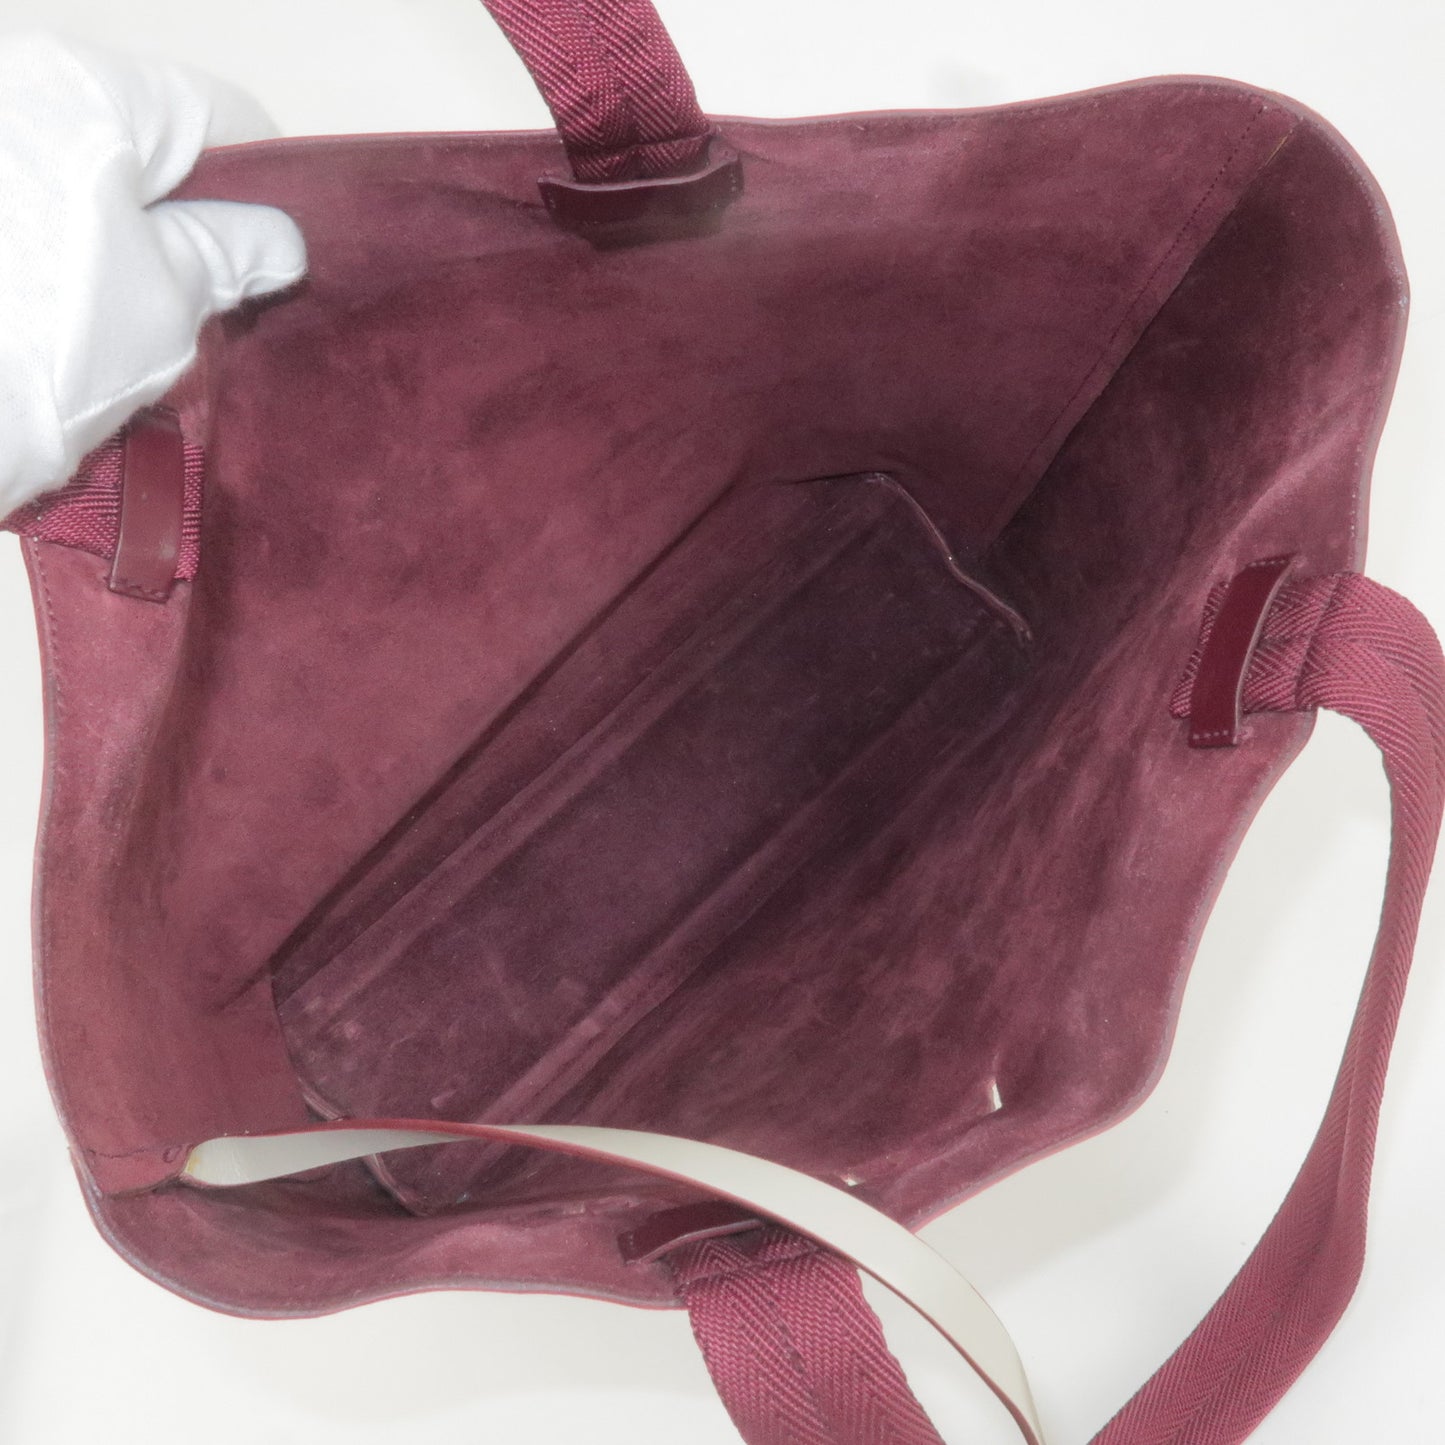 PRADA Leather Canvas Tote Bag Hand Bag Greige Red Wine B10189